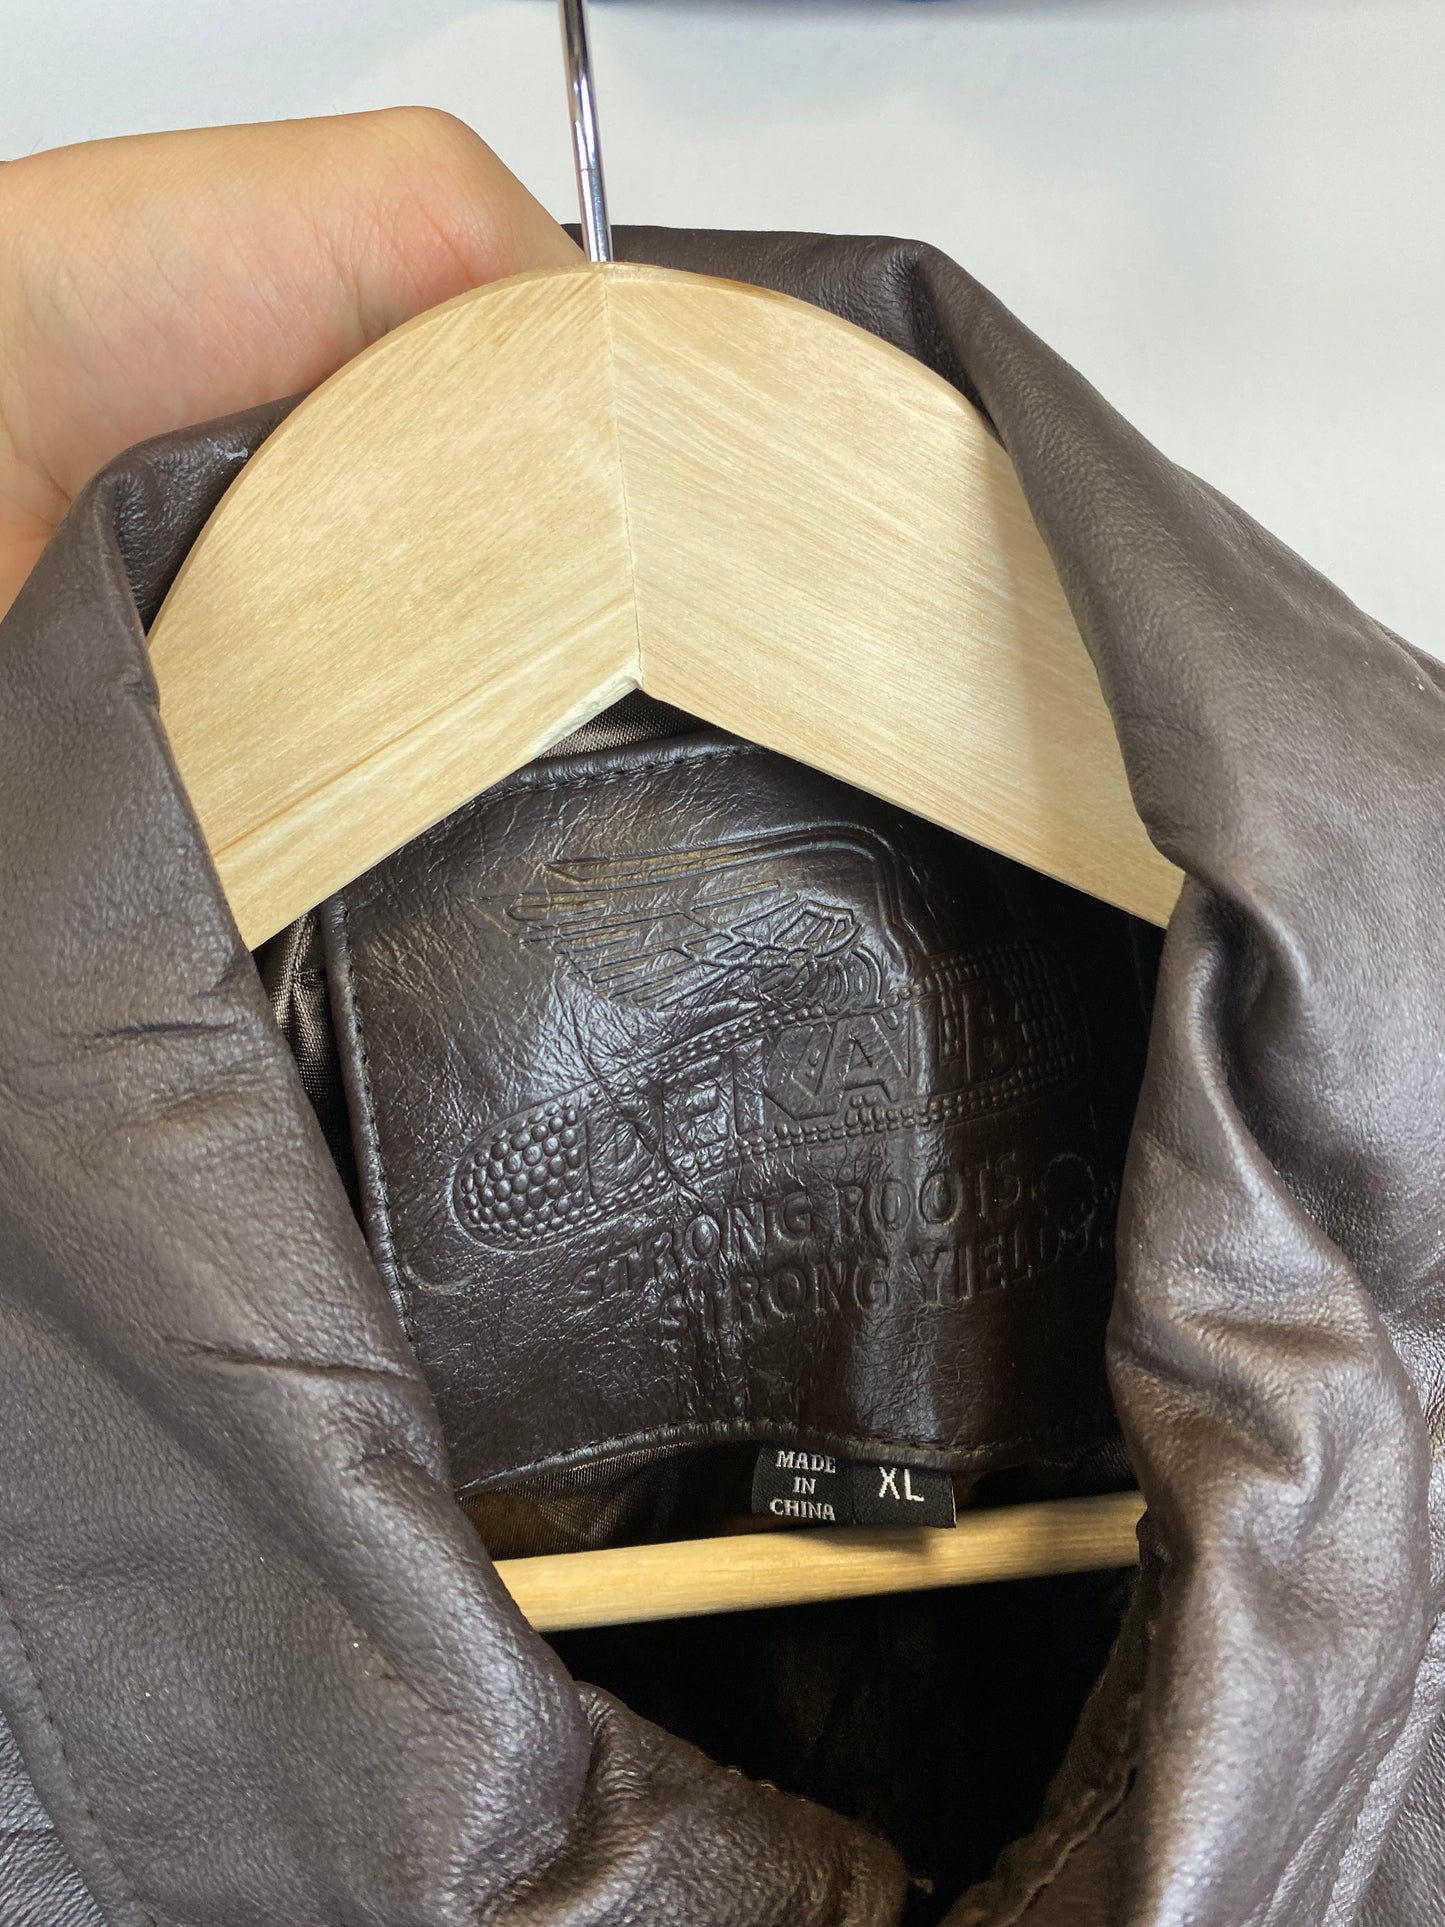 Vintage Leather Jacket Bomber - size XL